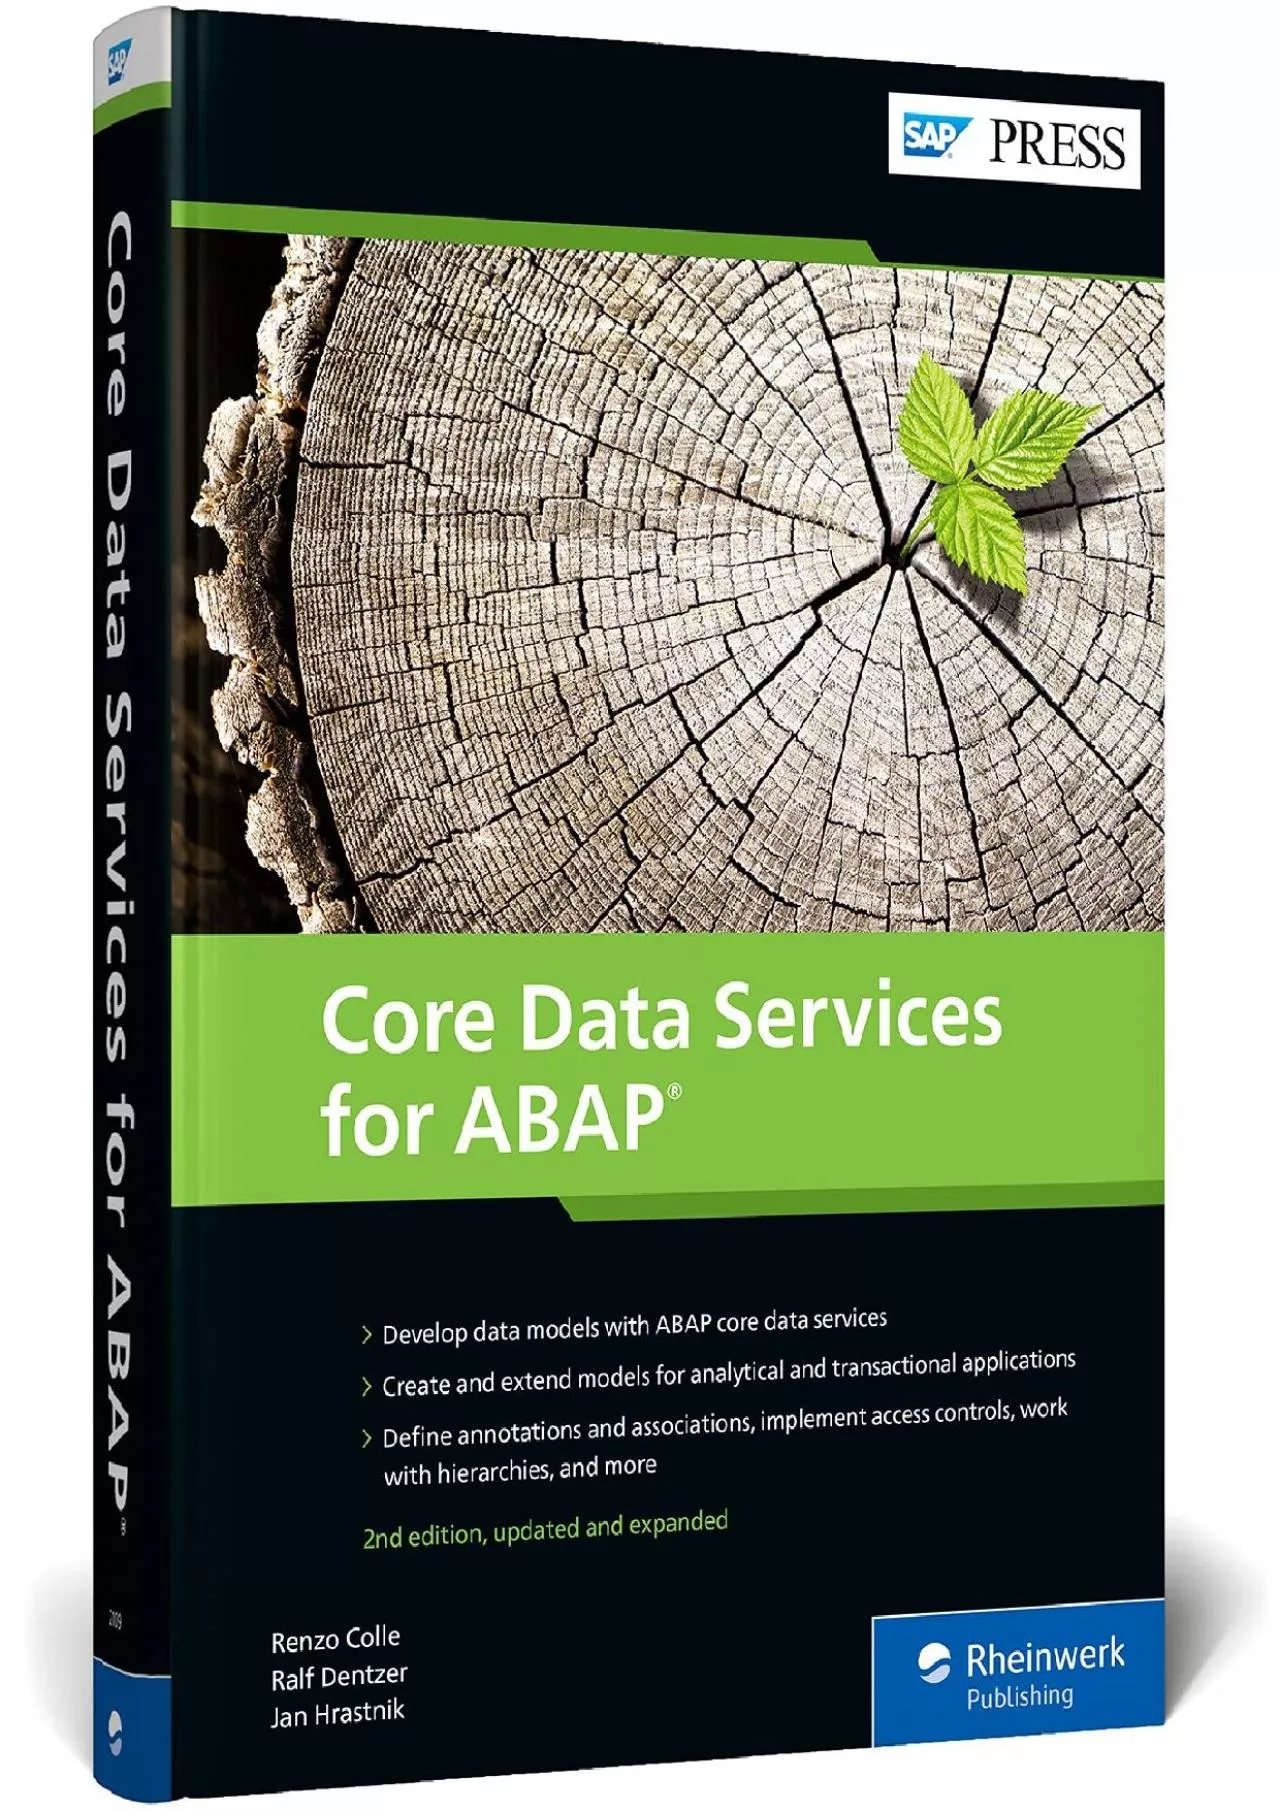 ABAP CDS: Core Data Services for ABAP (SAP PRESS) (Second Edition)